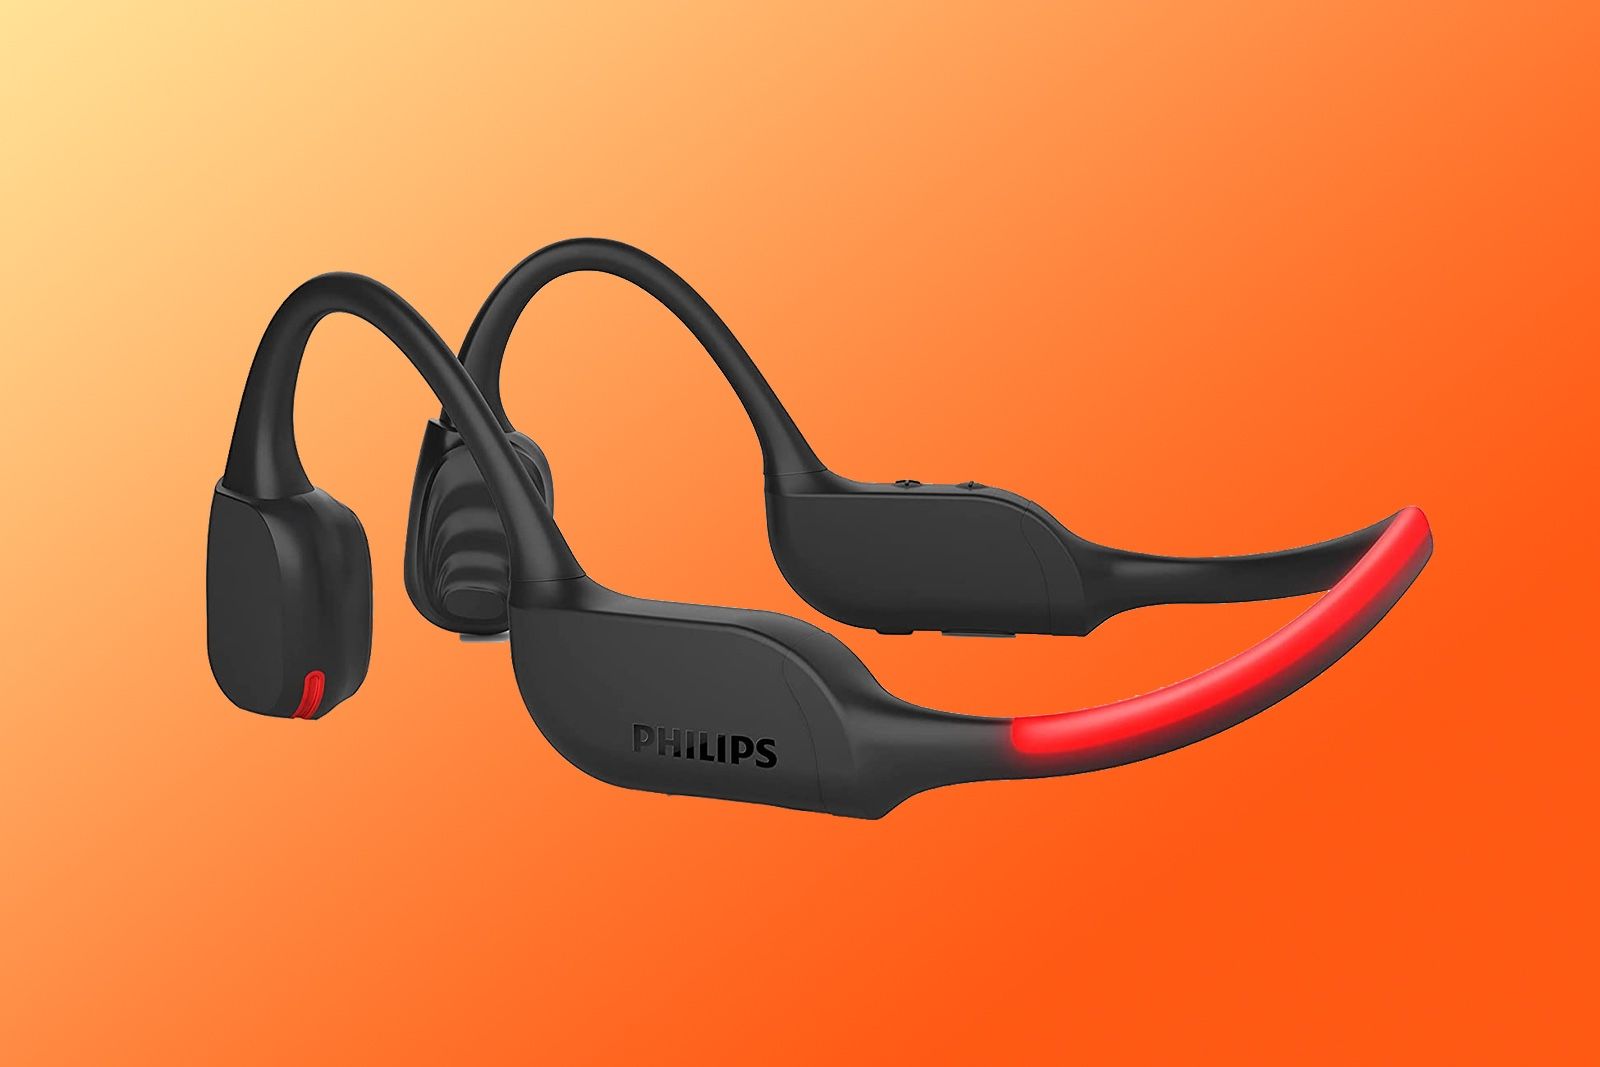 Philips A7607 bone conduction headphones review